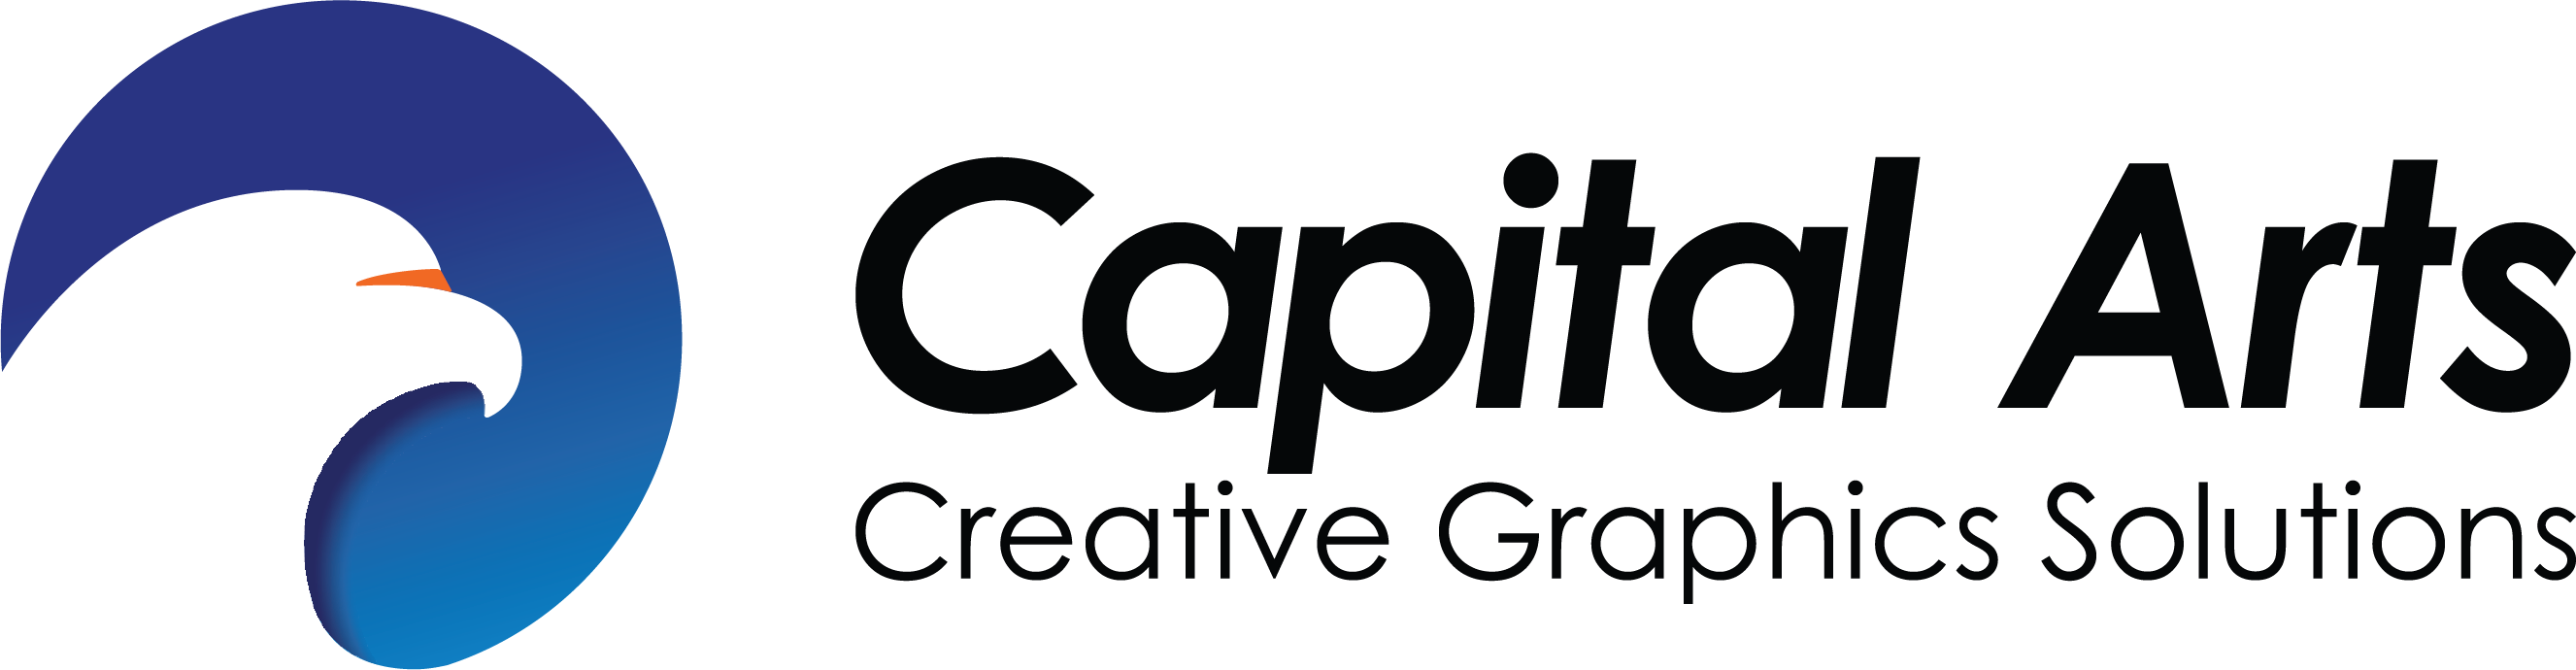 Capital Arts | Creative Graphic Solution